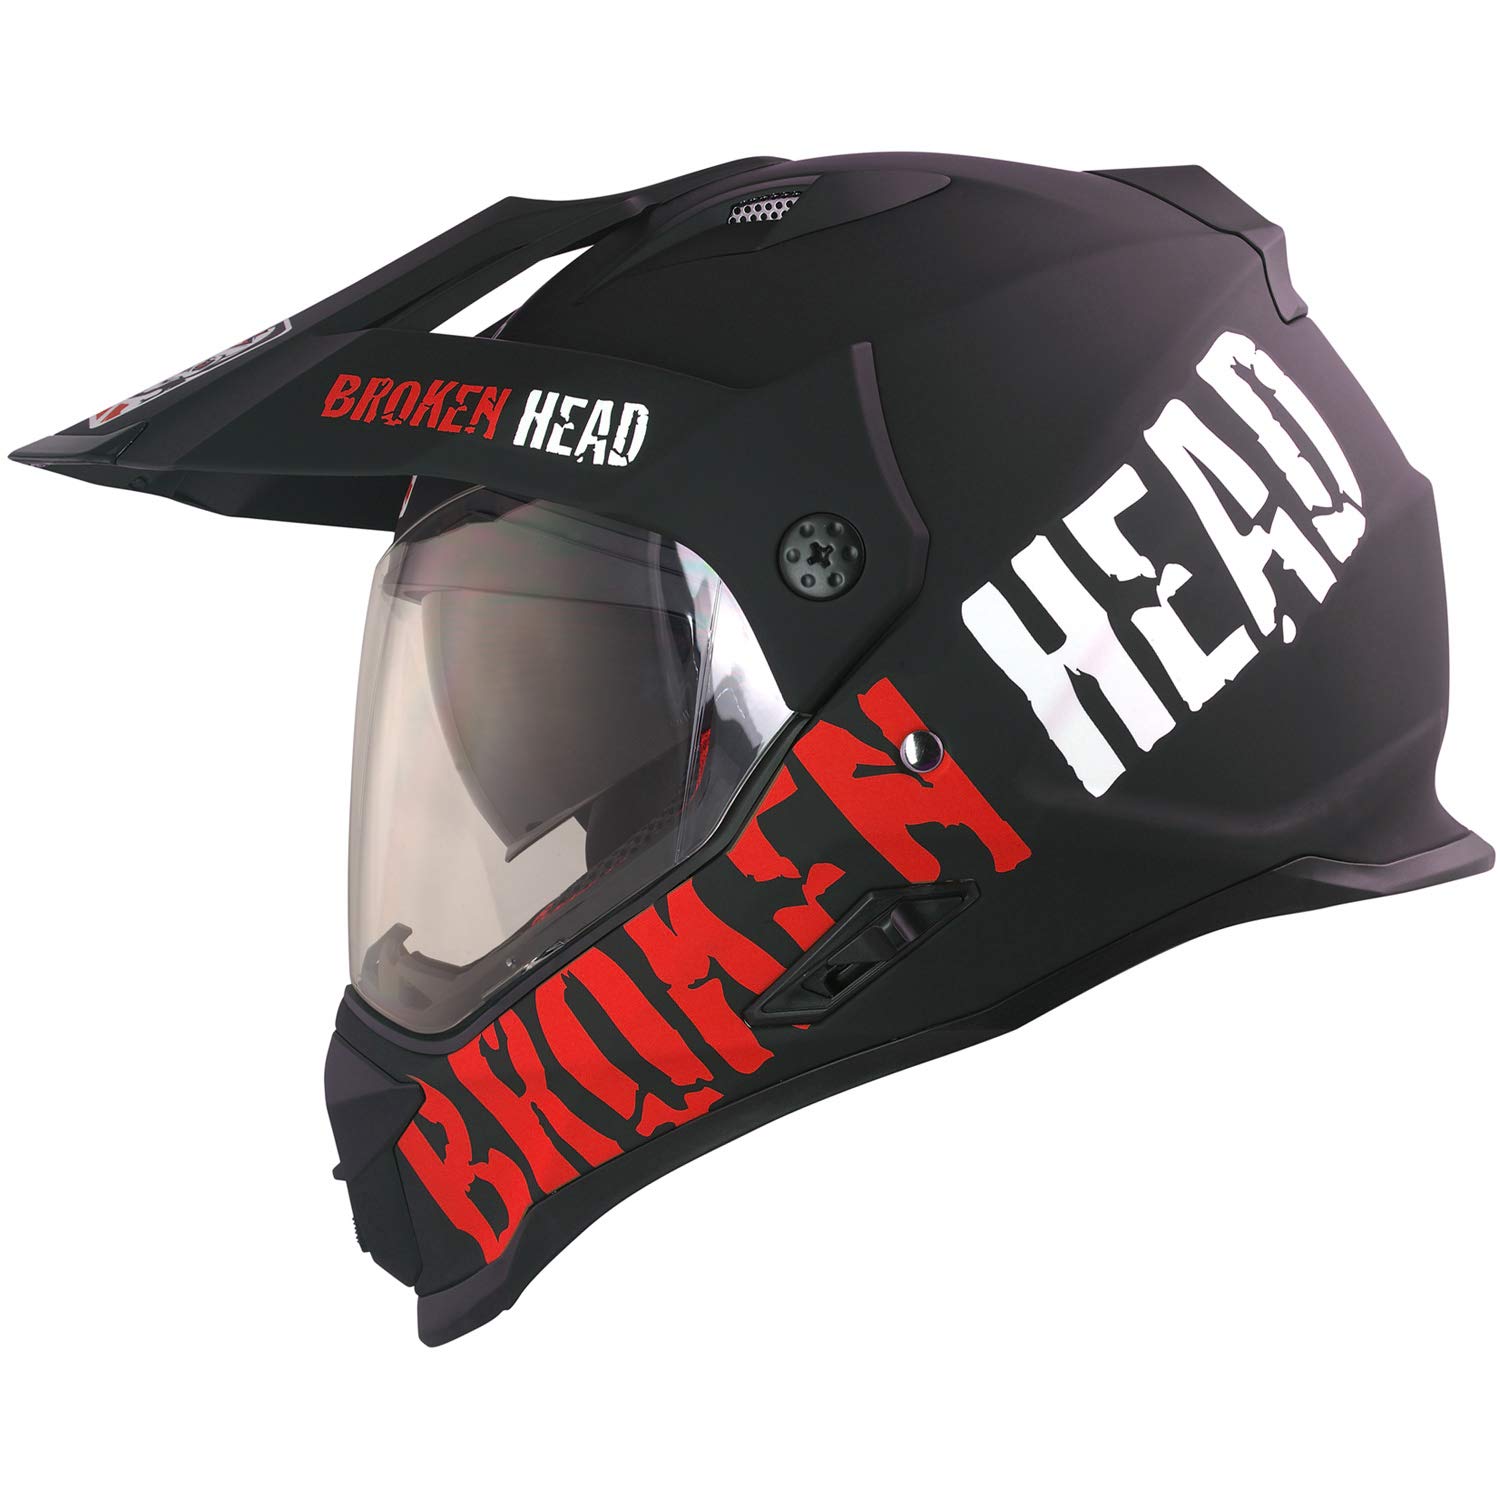 Broken Head Made2Rebel Motocross-Helm Rot Mit Visier - Enduro-Helm - MX Cross-Helm Mit Sonnenblende - Quad-Helm (S 55-56cm)